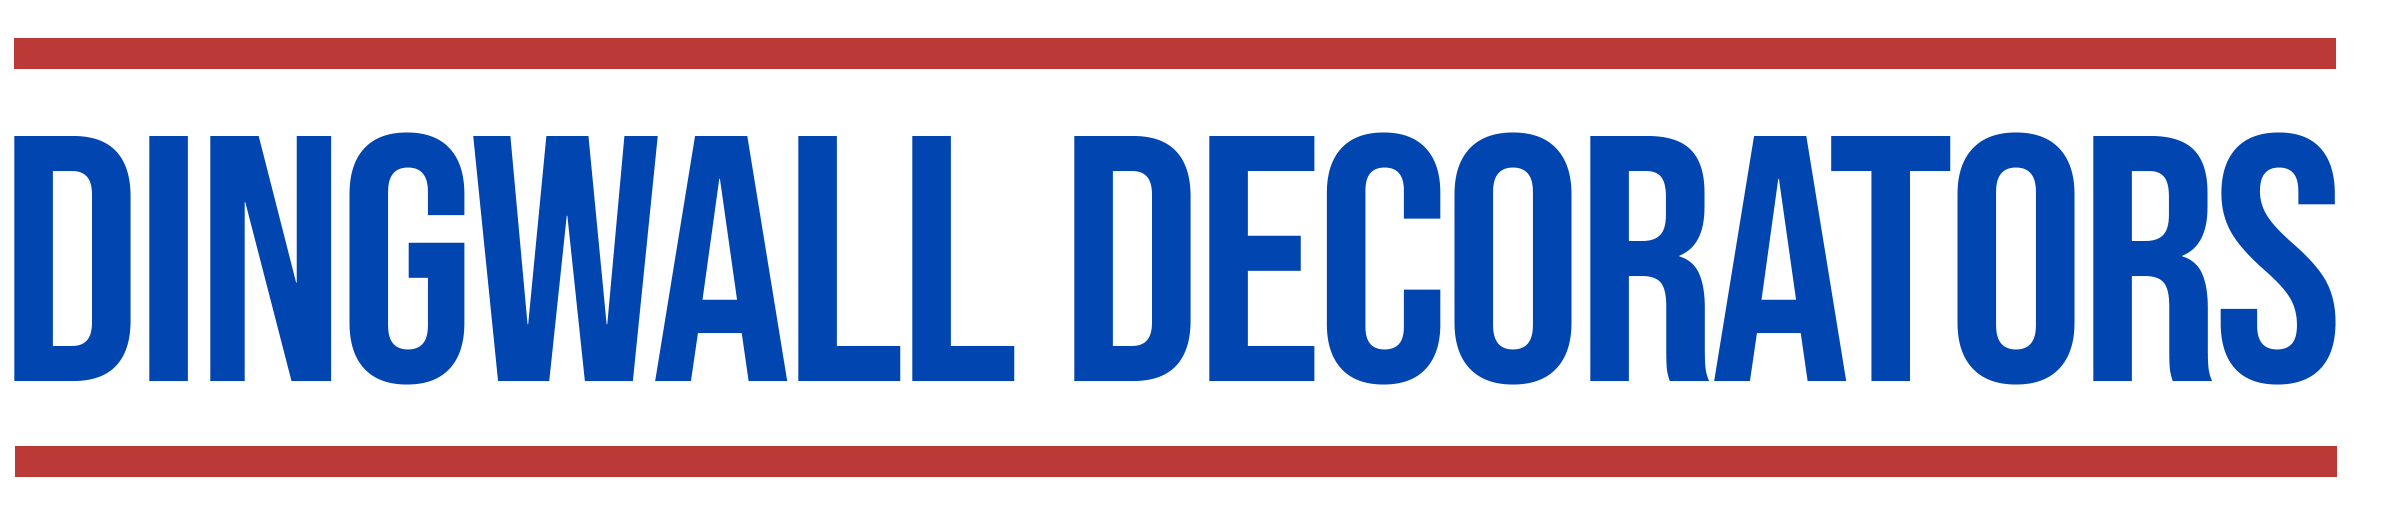 Dingwall Decorators Logo